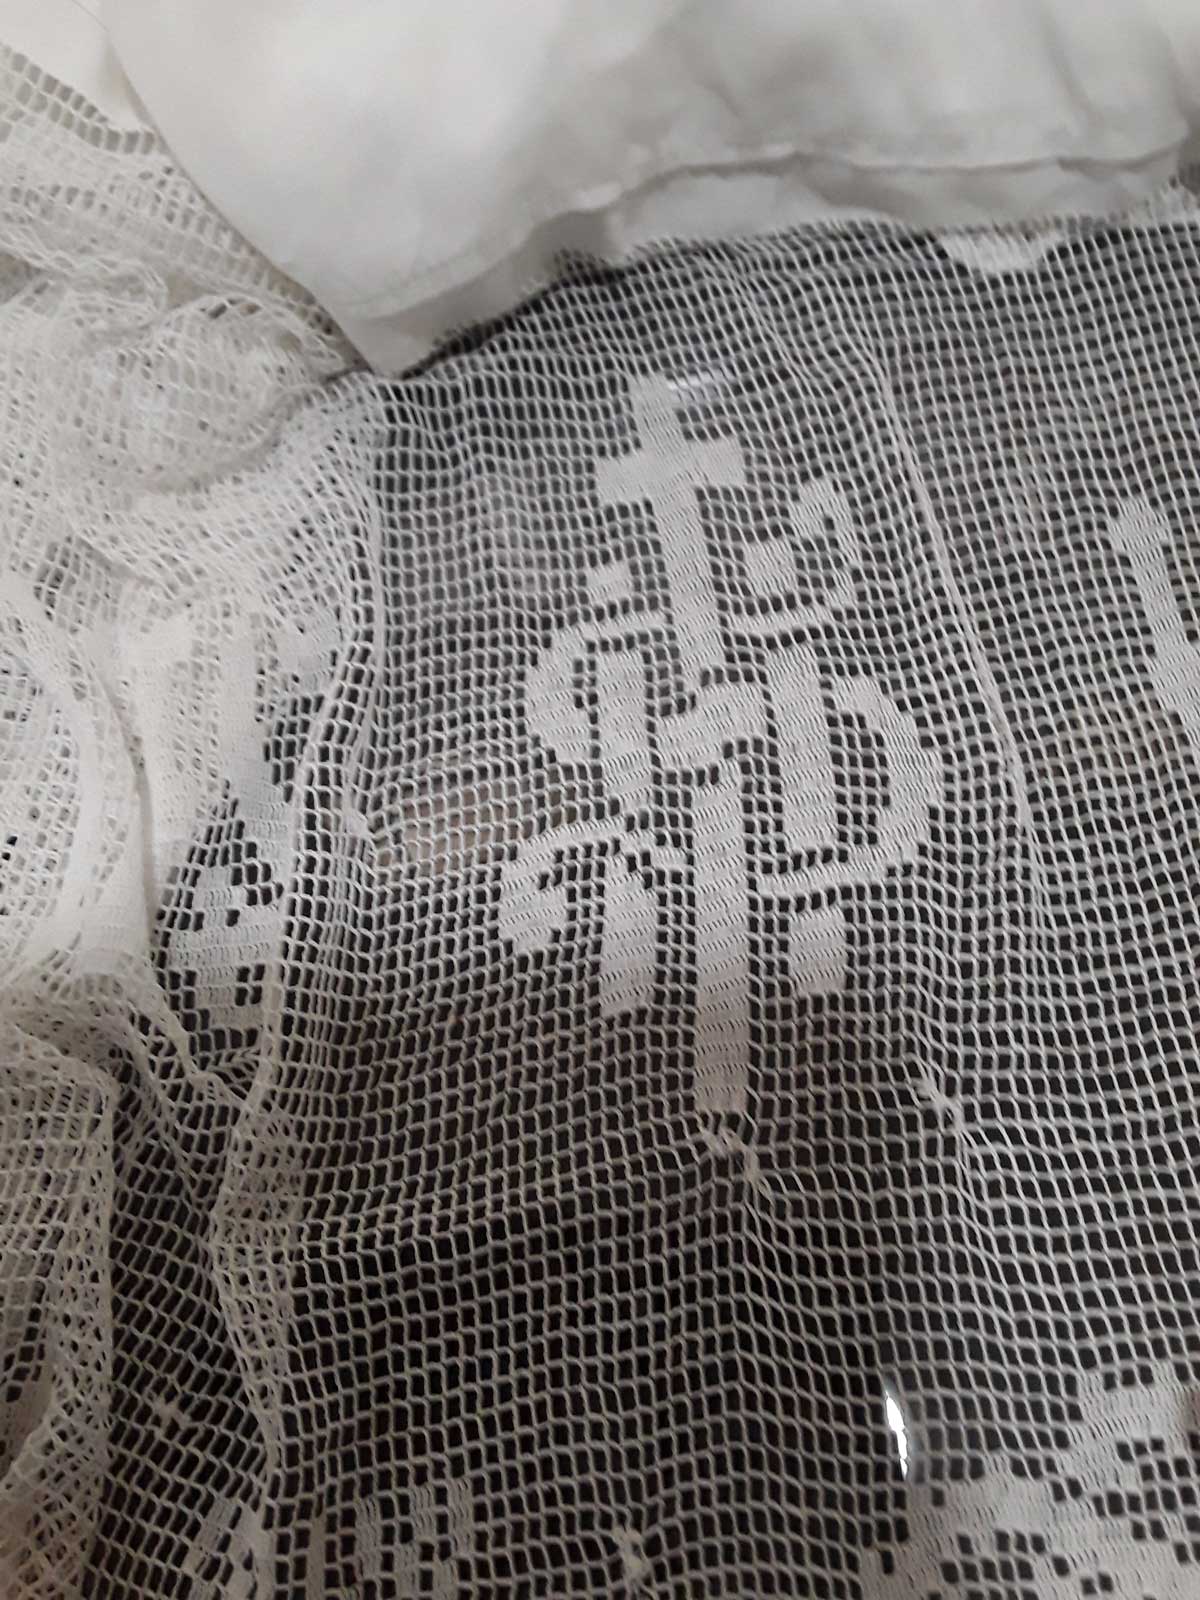 ecclesiastical lace